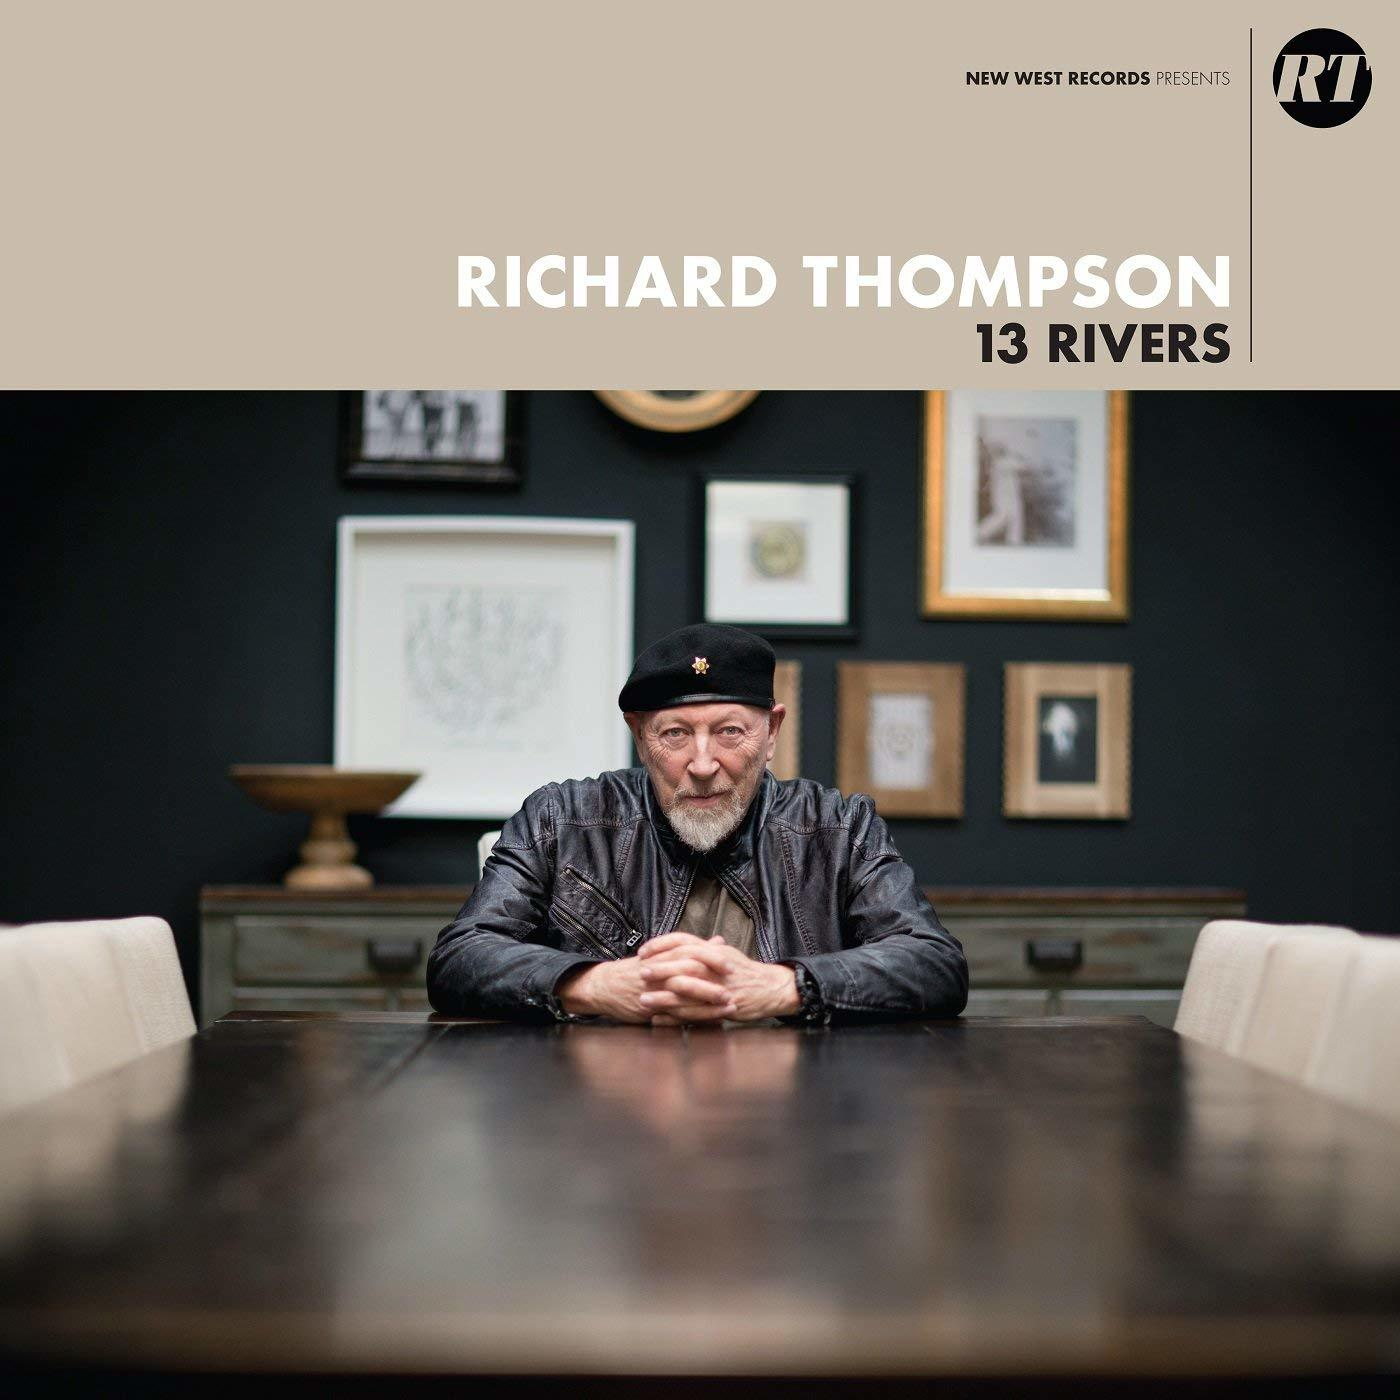 Richard - - Thompson (Vinyl) 13 Rivers